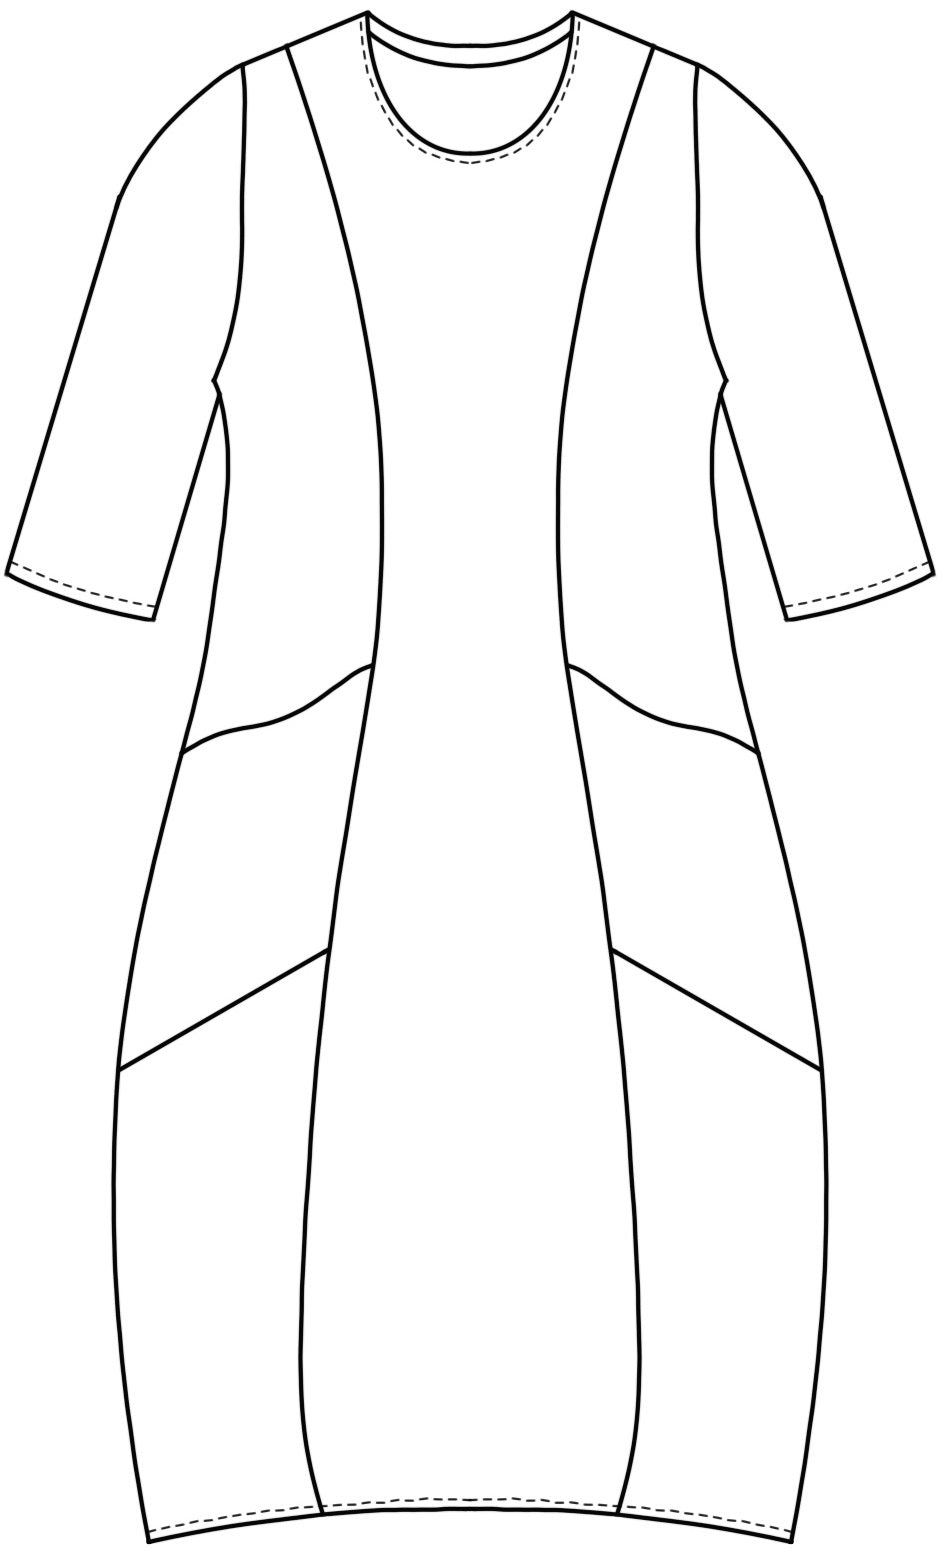 a flat drawing of a dress